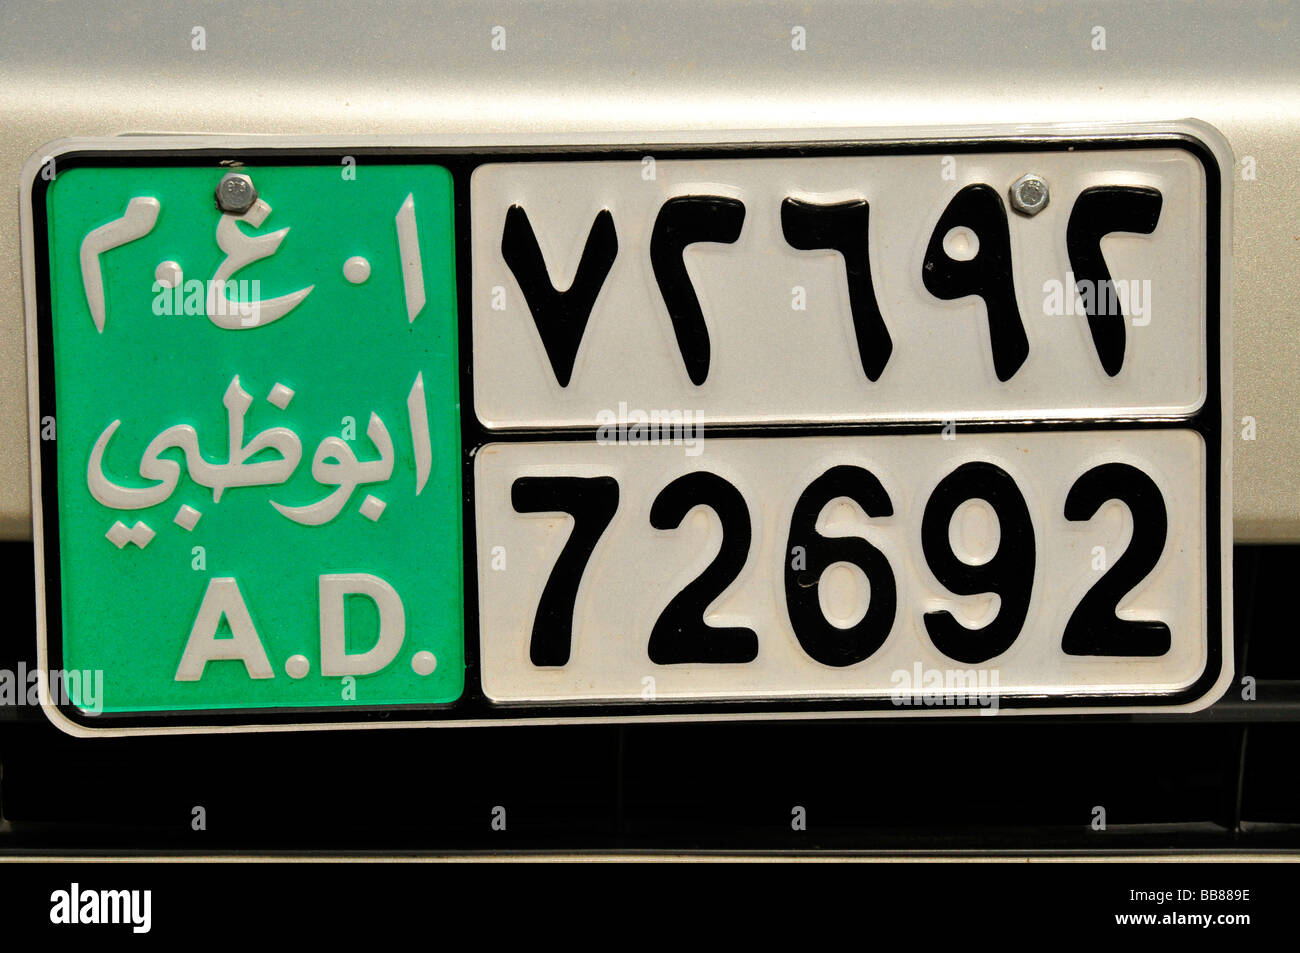 Placa de número de Abu Dhabi, Emiratos Árabes Unidos, Arabia, Oriente, Oriente Medio Foto de stock